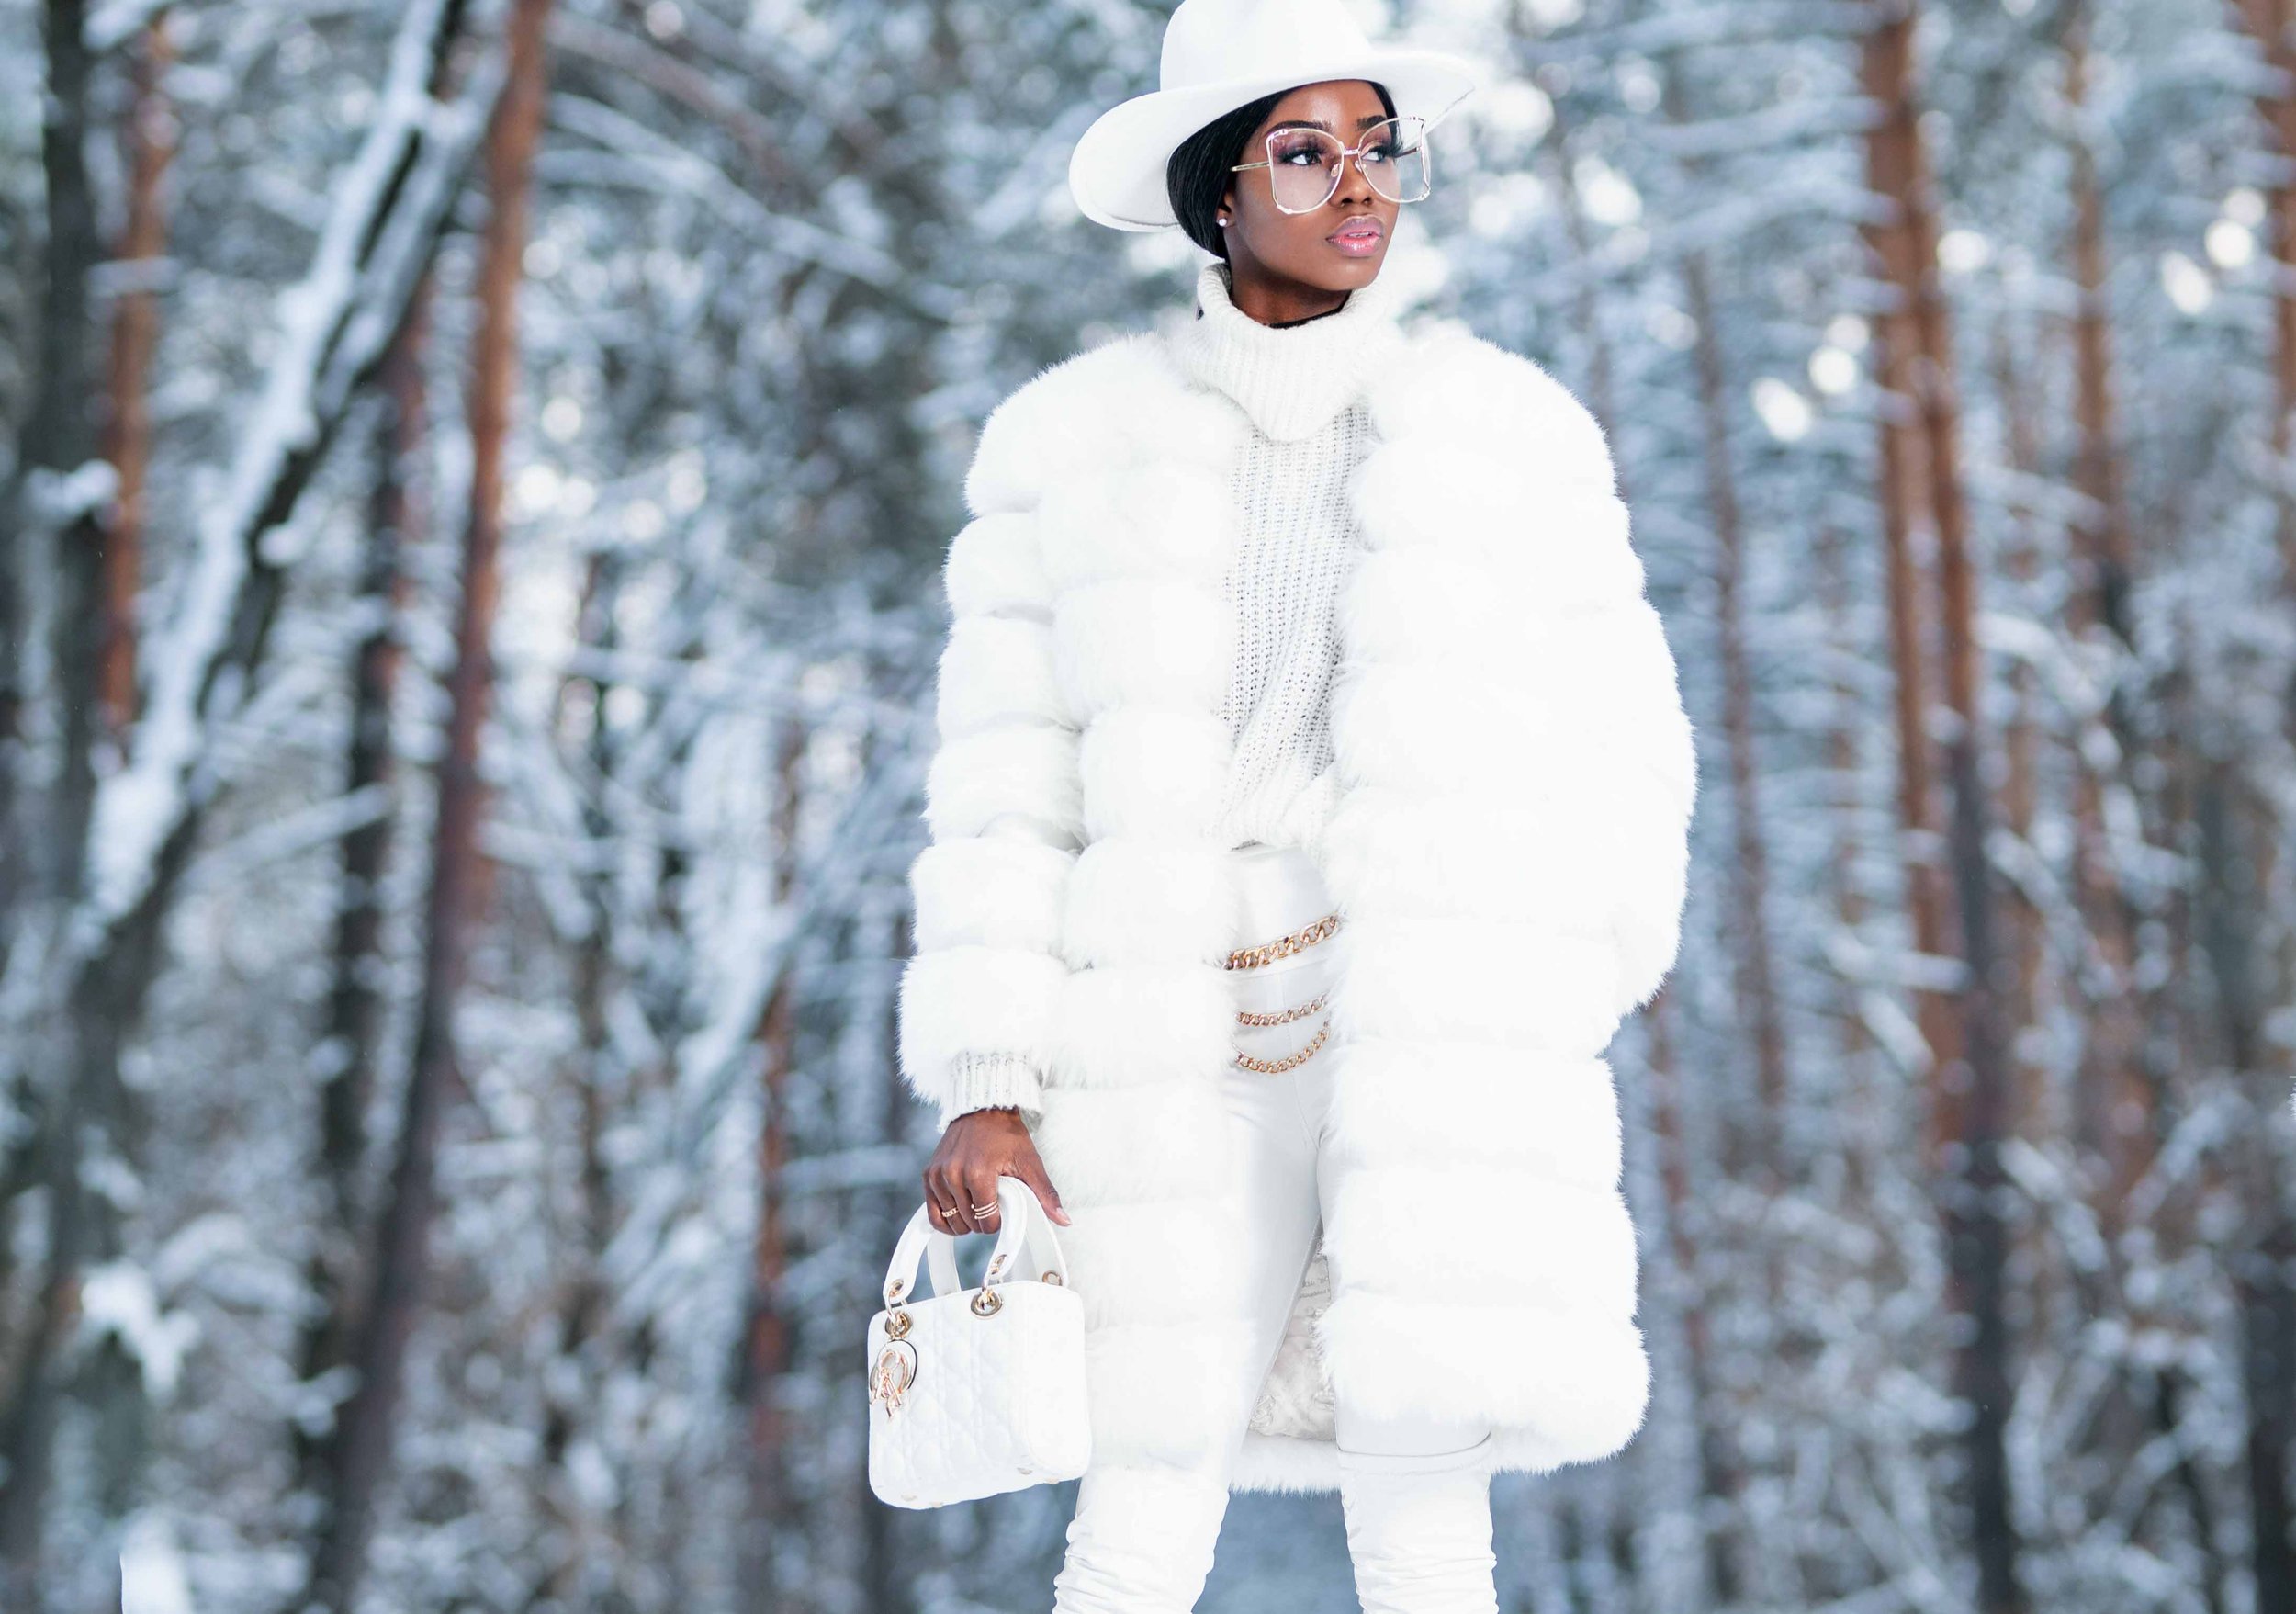 Most demanding snowfall coats winter outfits stylish fur collar